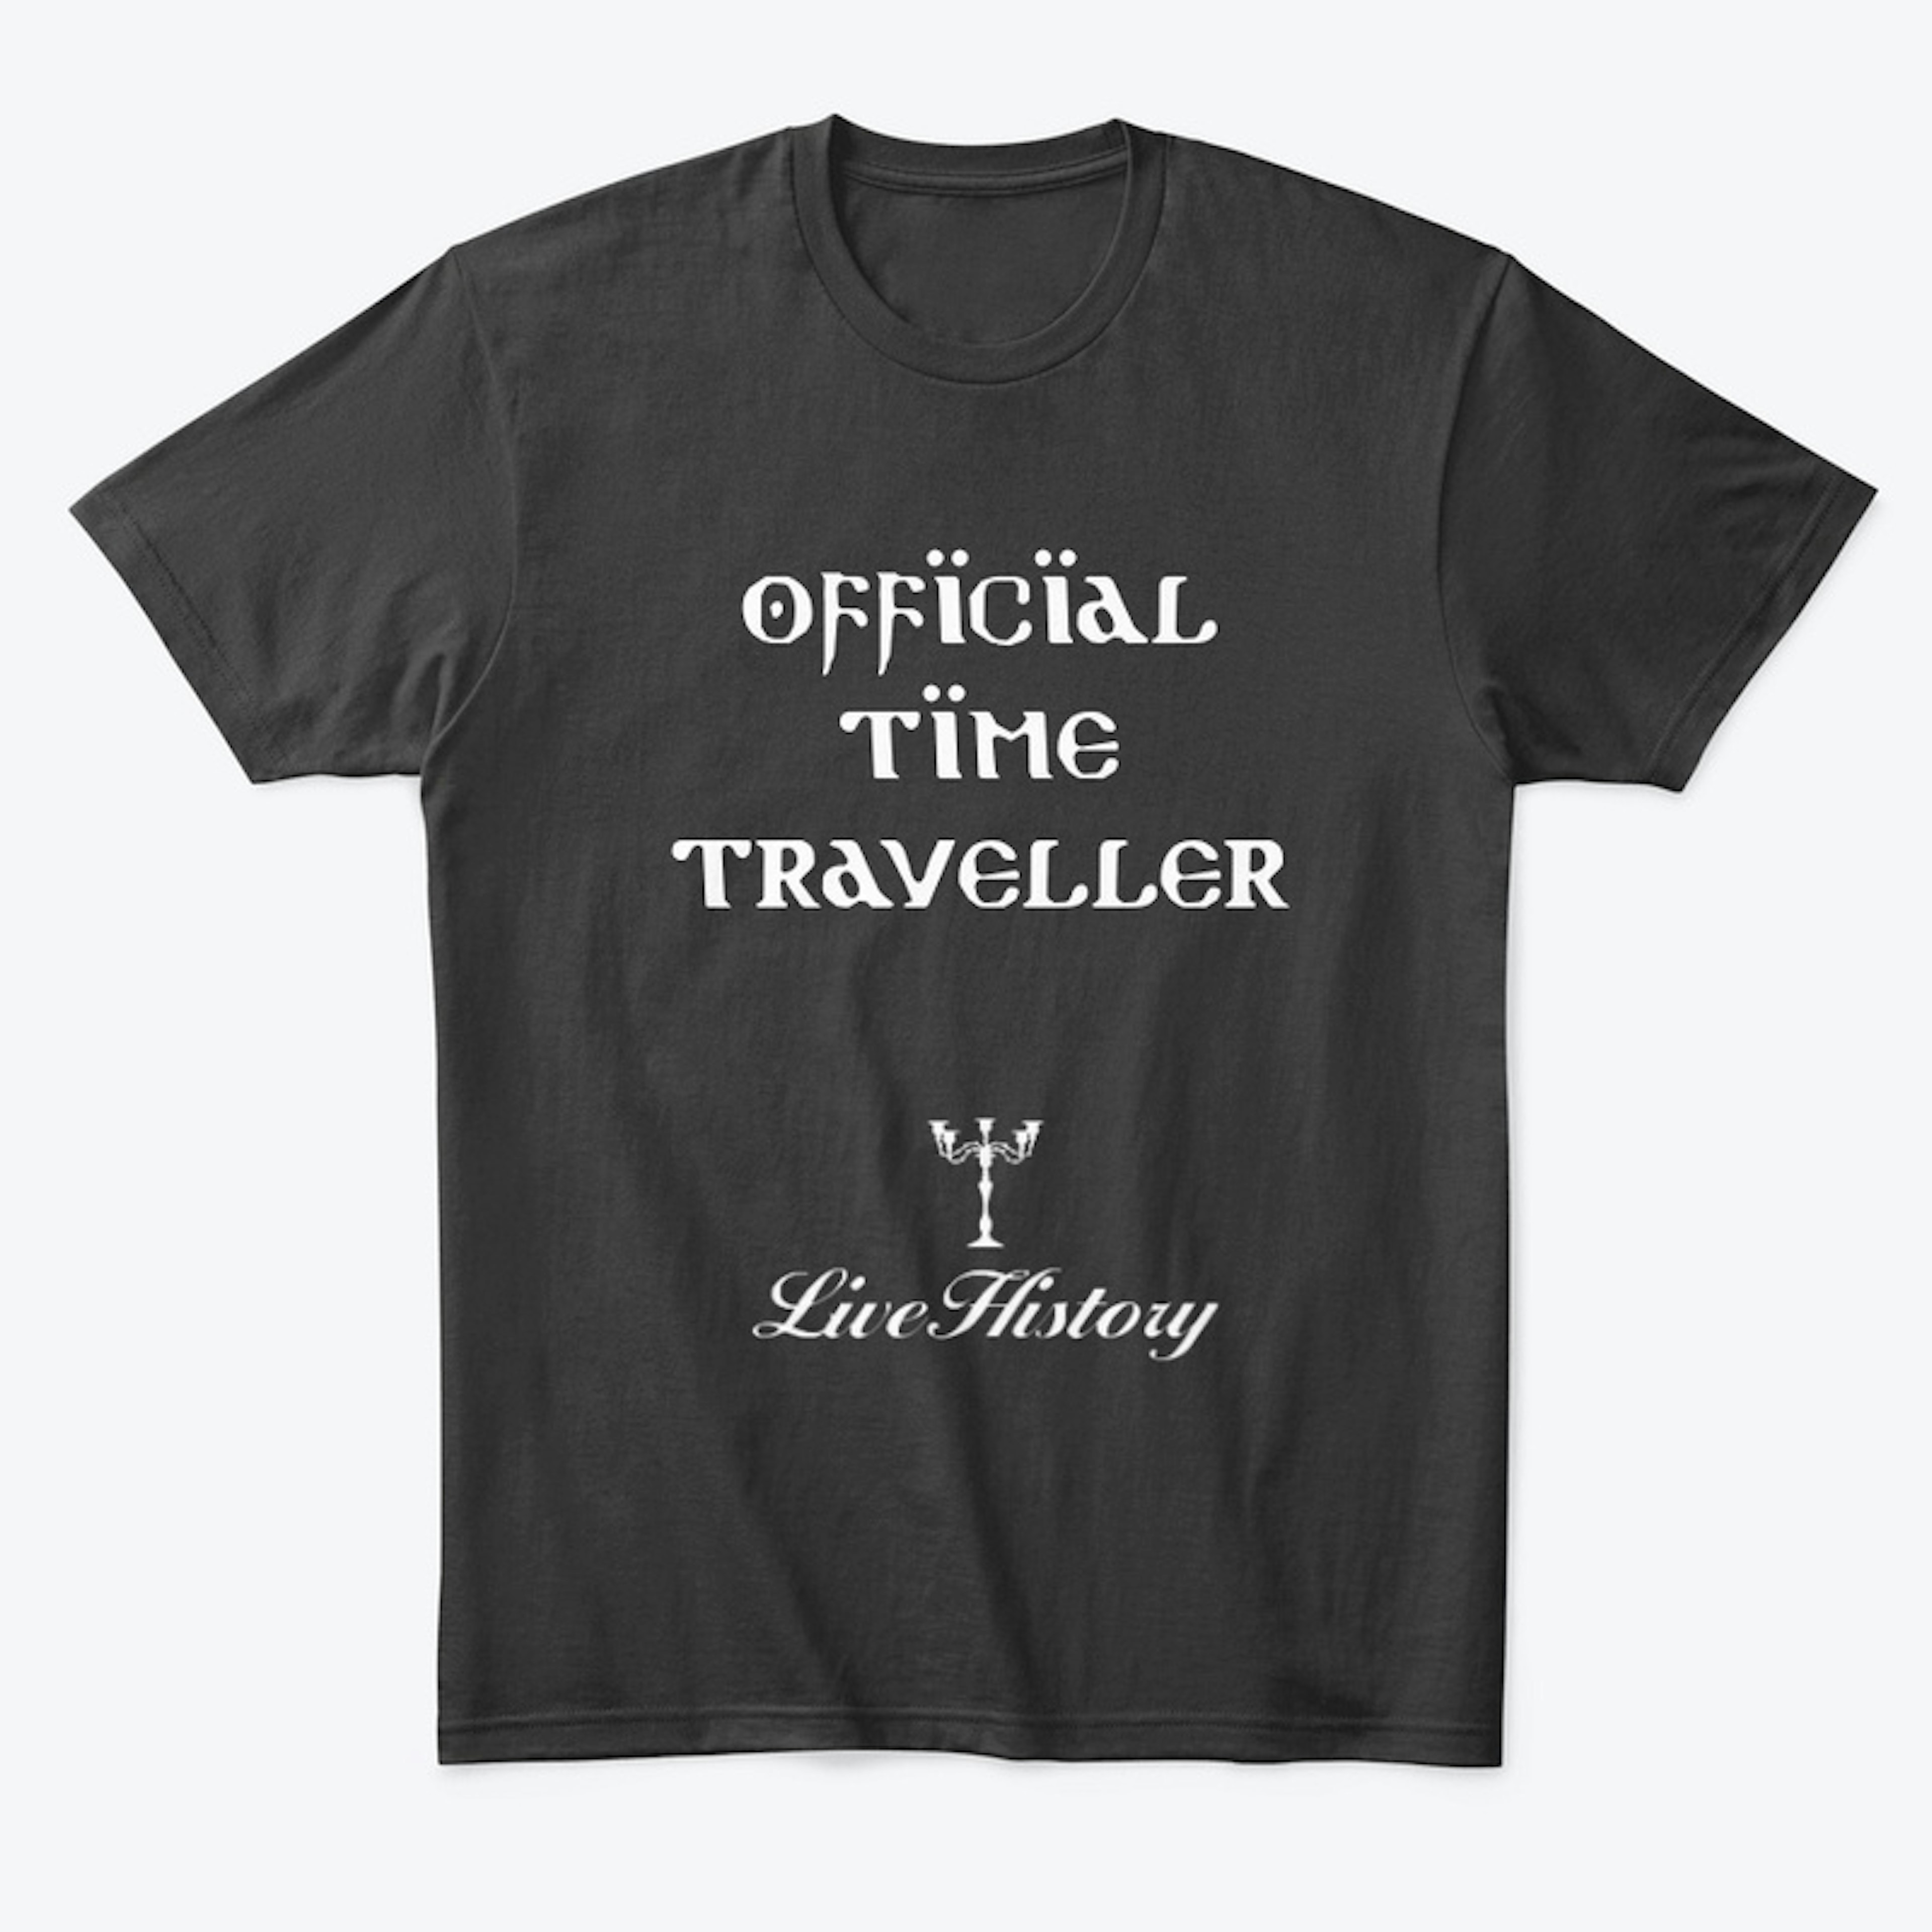 Official Time Traveller shirts- Black